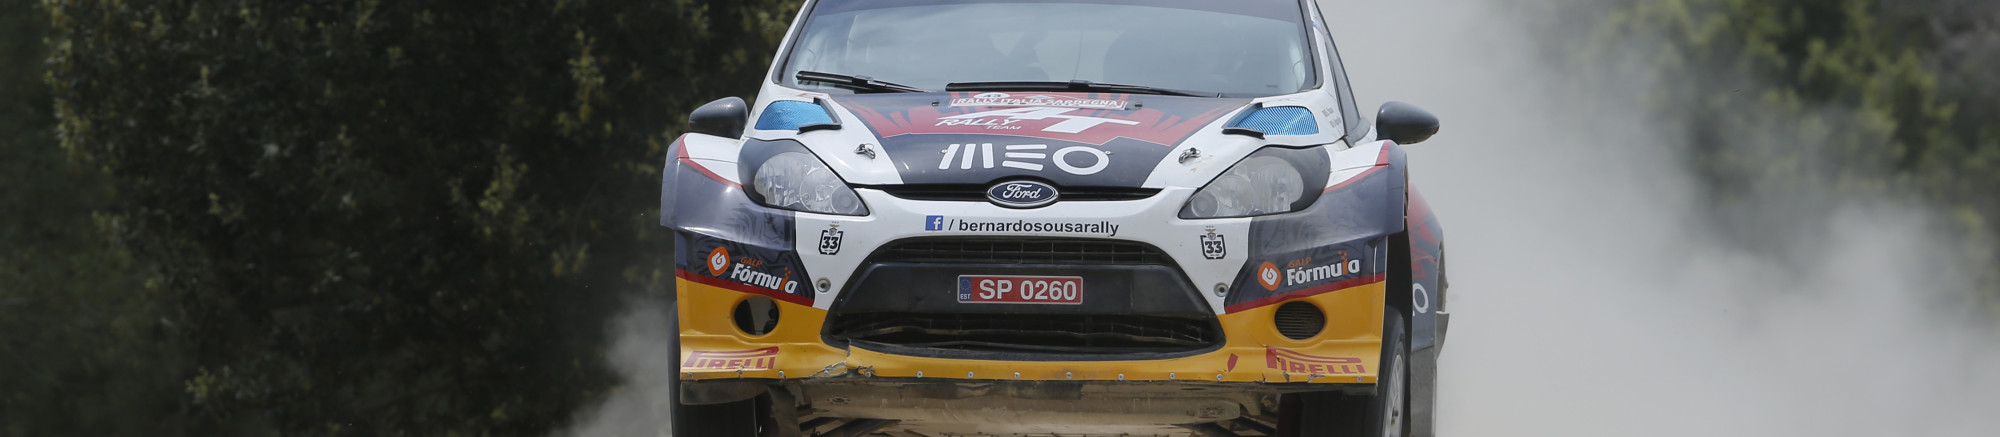 Bernardo SOUSA, Hugo MAGALHAES, Ford Fiesta RRC, 2014 WRC, rally of Italia Sardegna, Alghero and Cagliari, Italy.